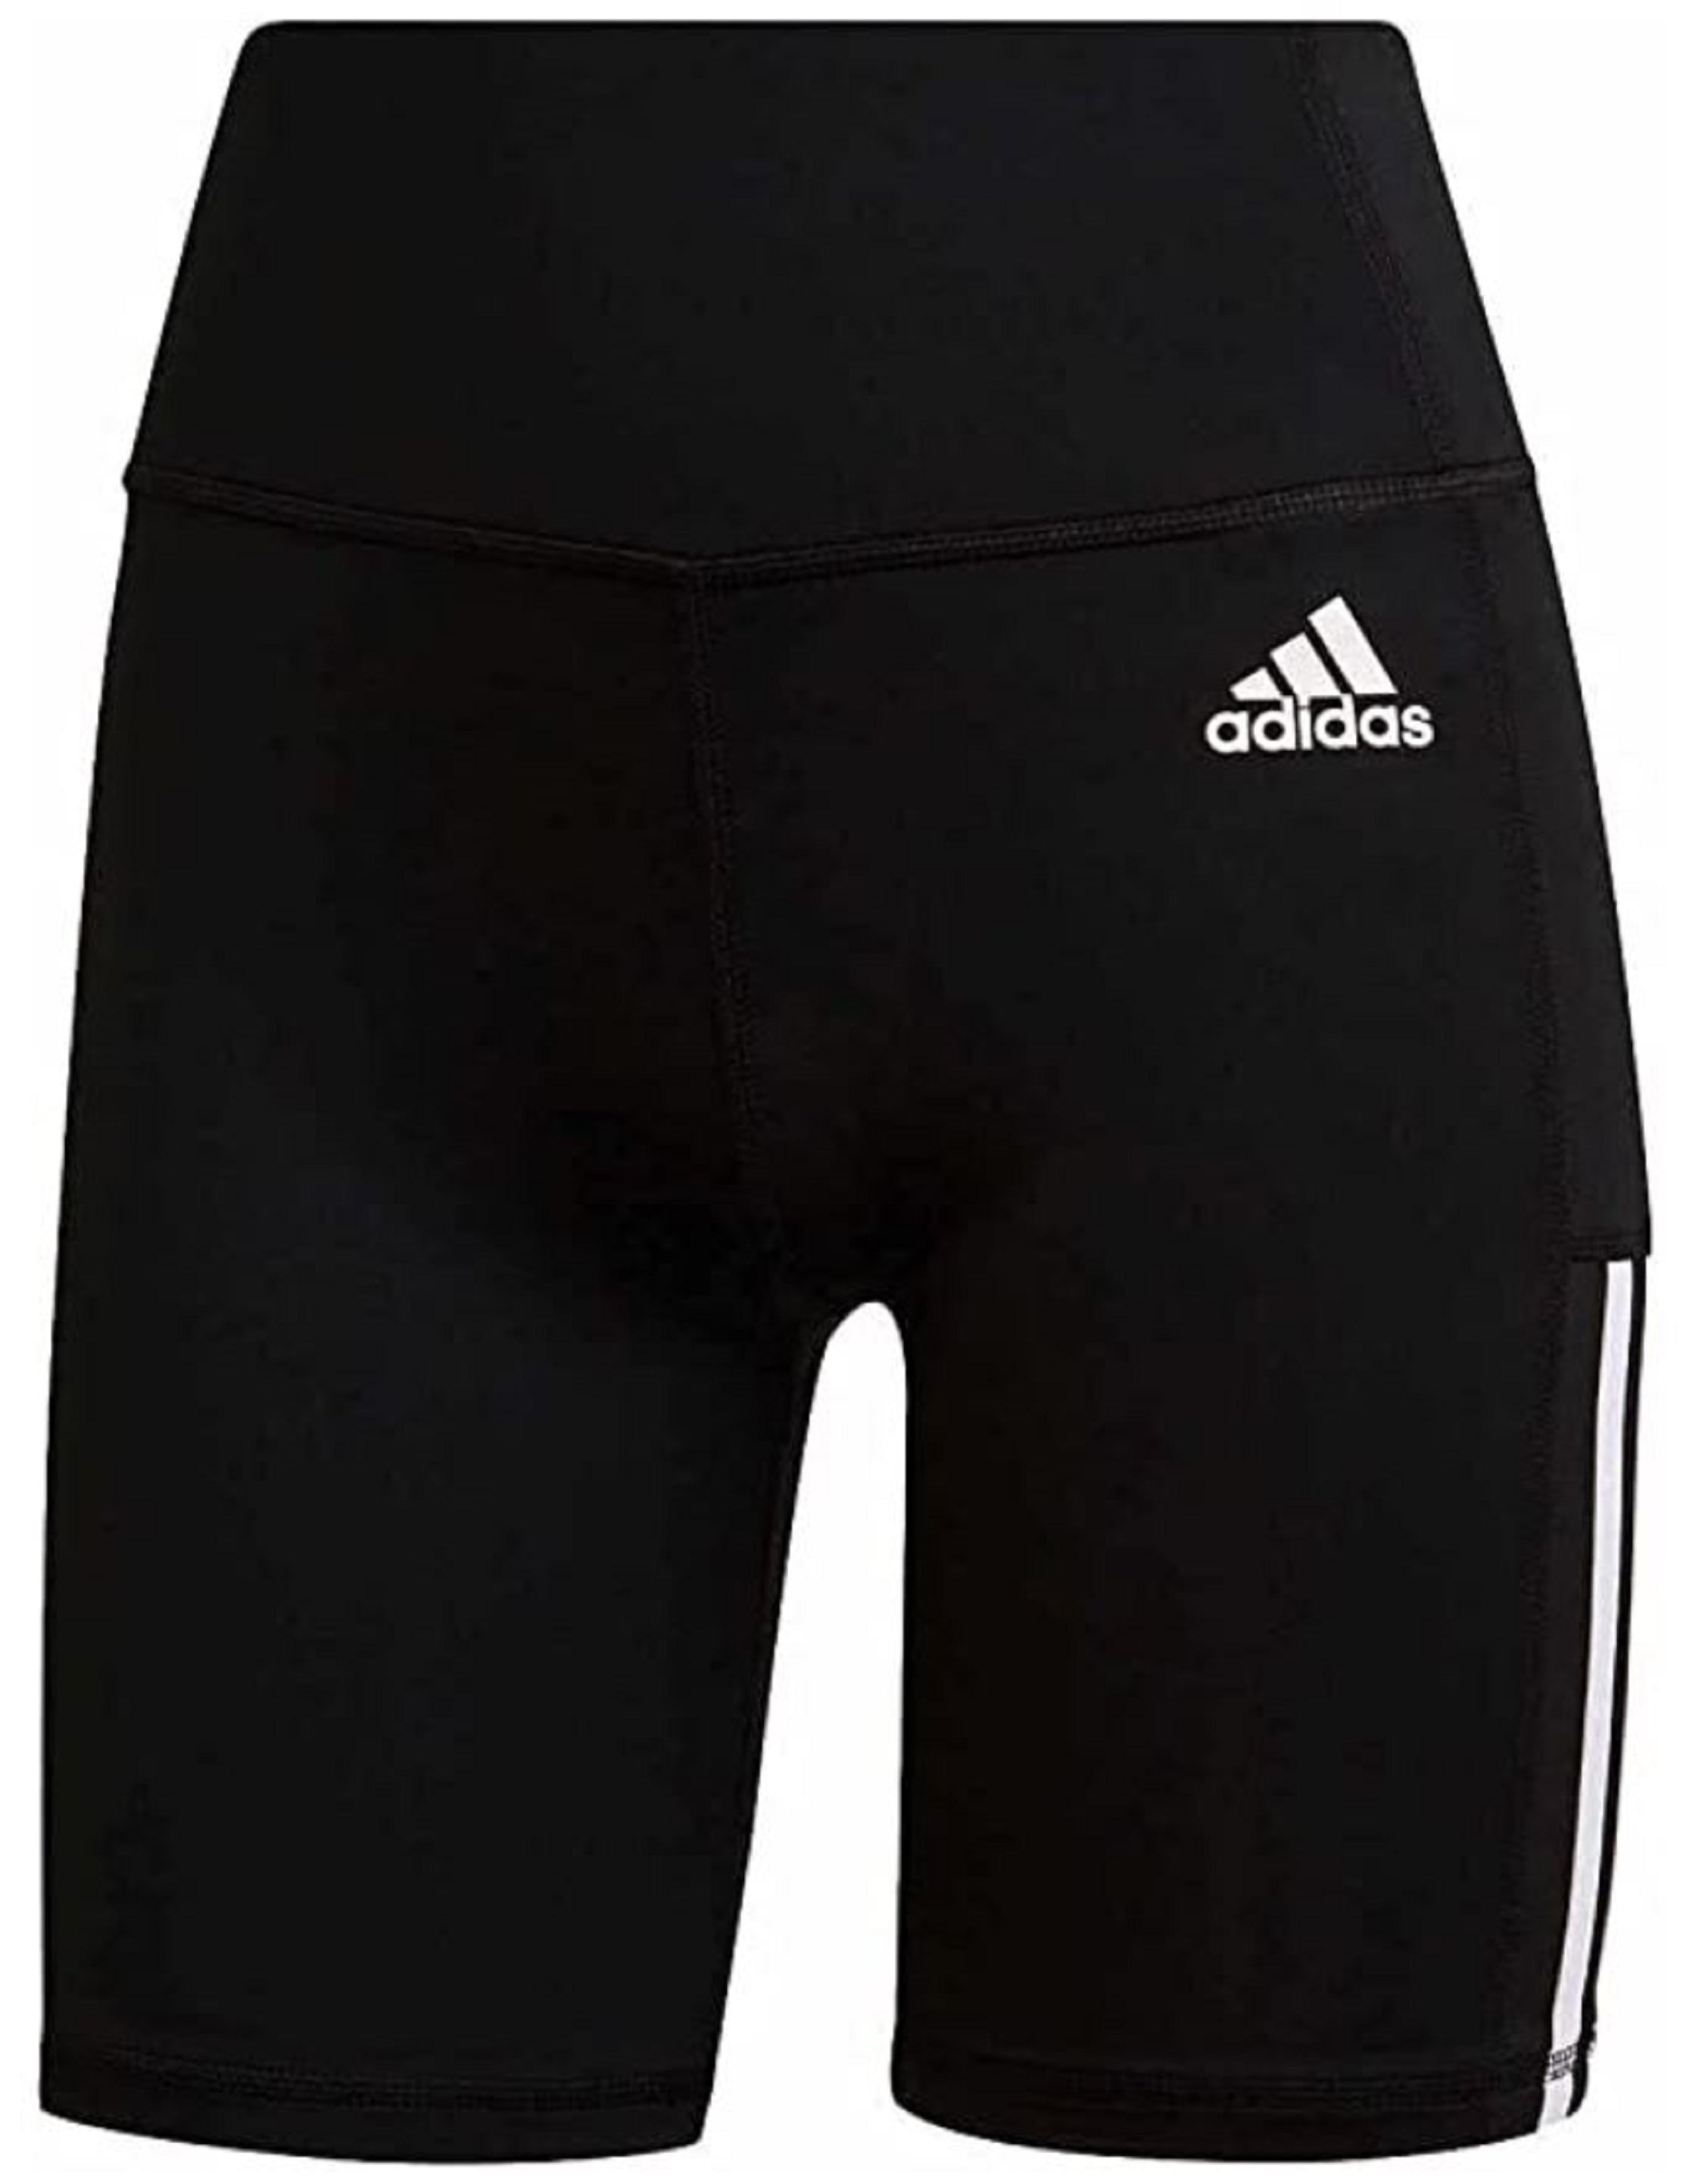 adidas Womens 3 Stripe High Bike Shorts (Black/White, Medium) - Walmart.com